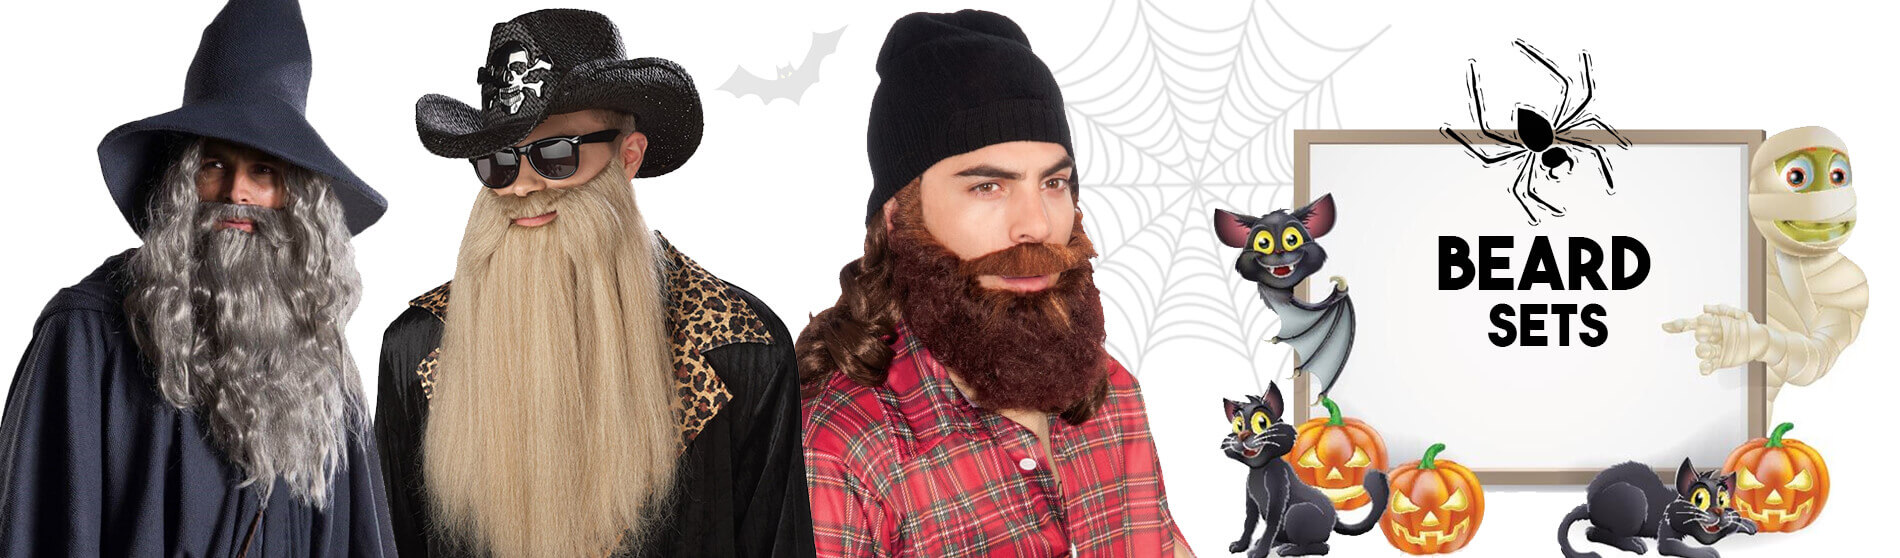 Glendale Halloween : Beard-Sets